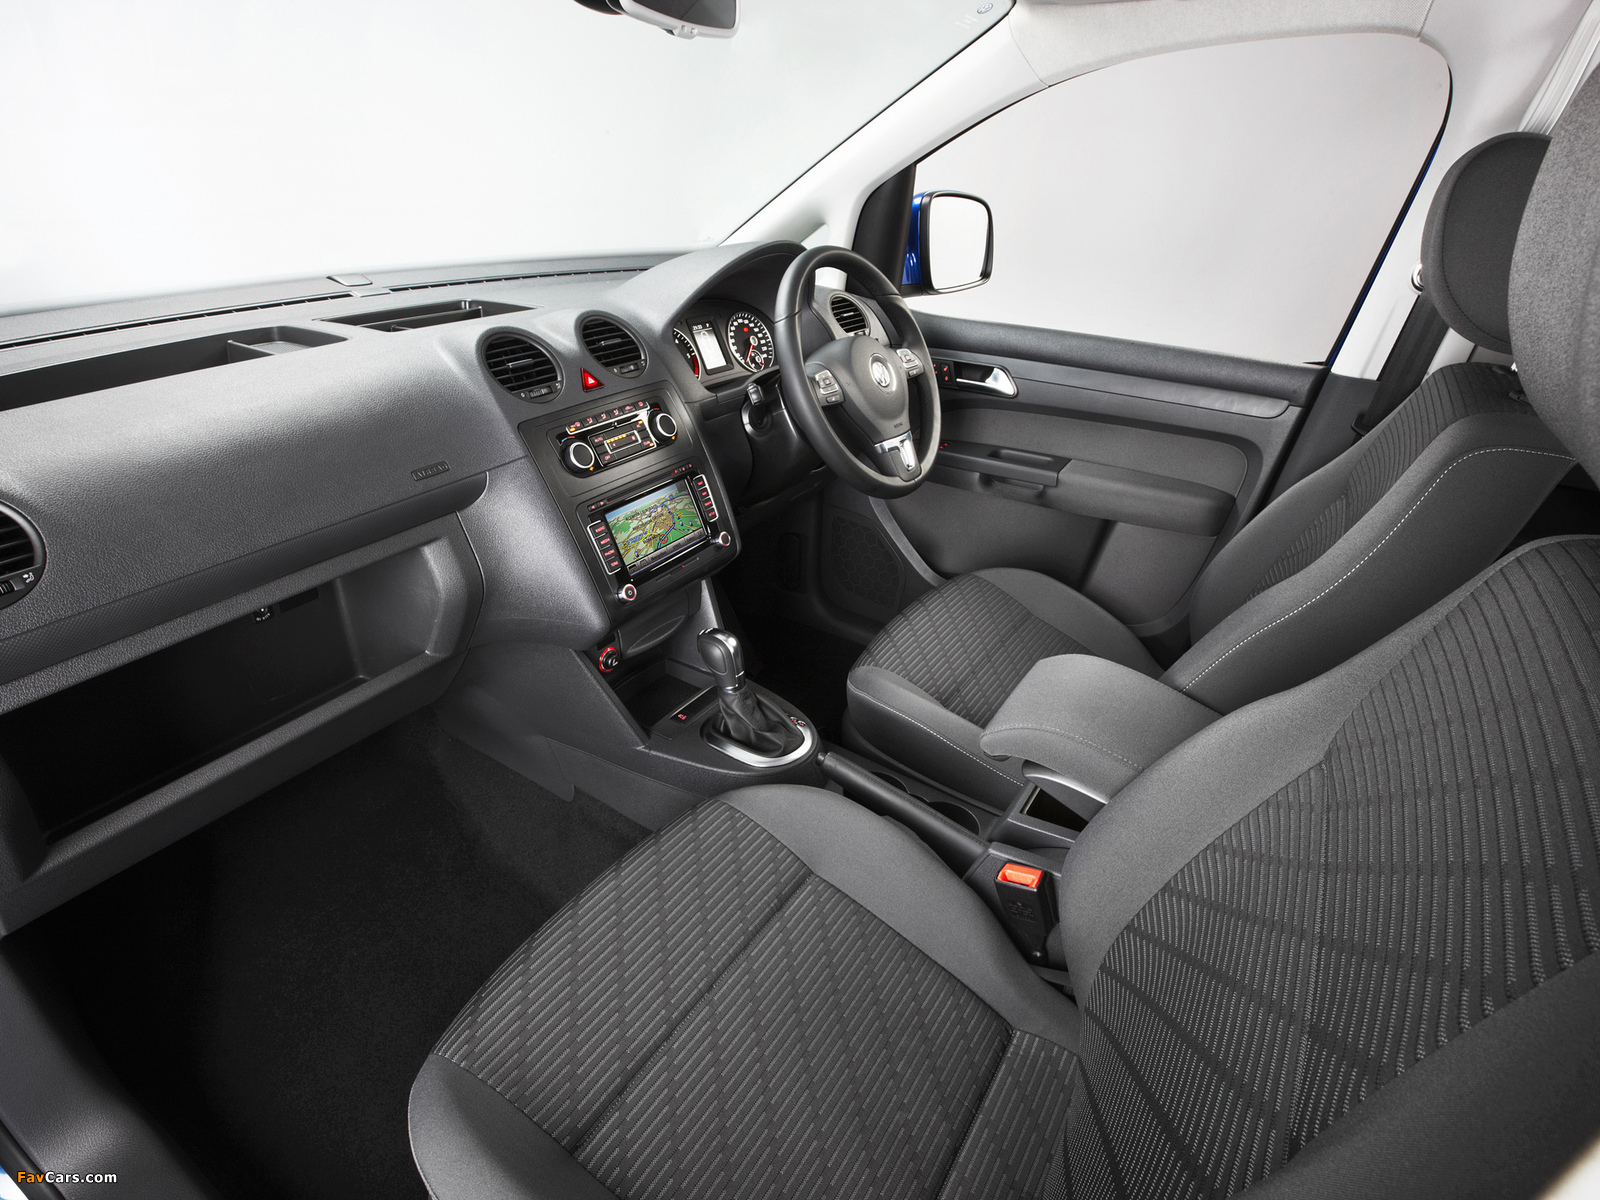 Volkswagen Caddy Maxi 4MOTION AU-spec (Type 2K) 2010 images (1600 x 1200)